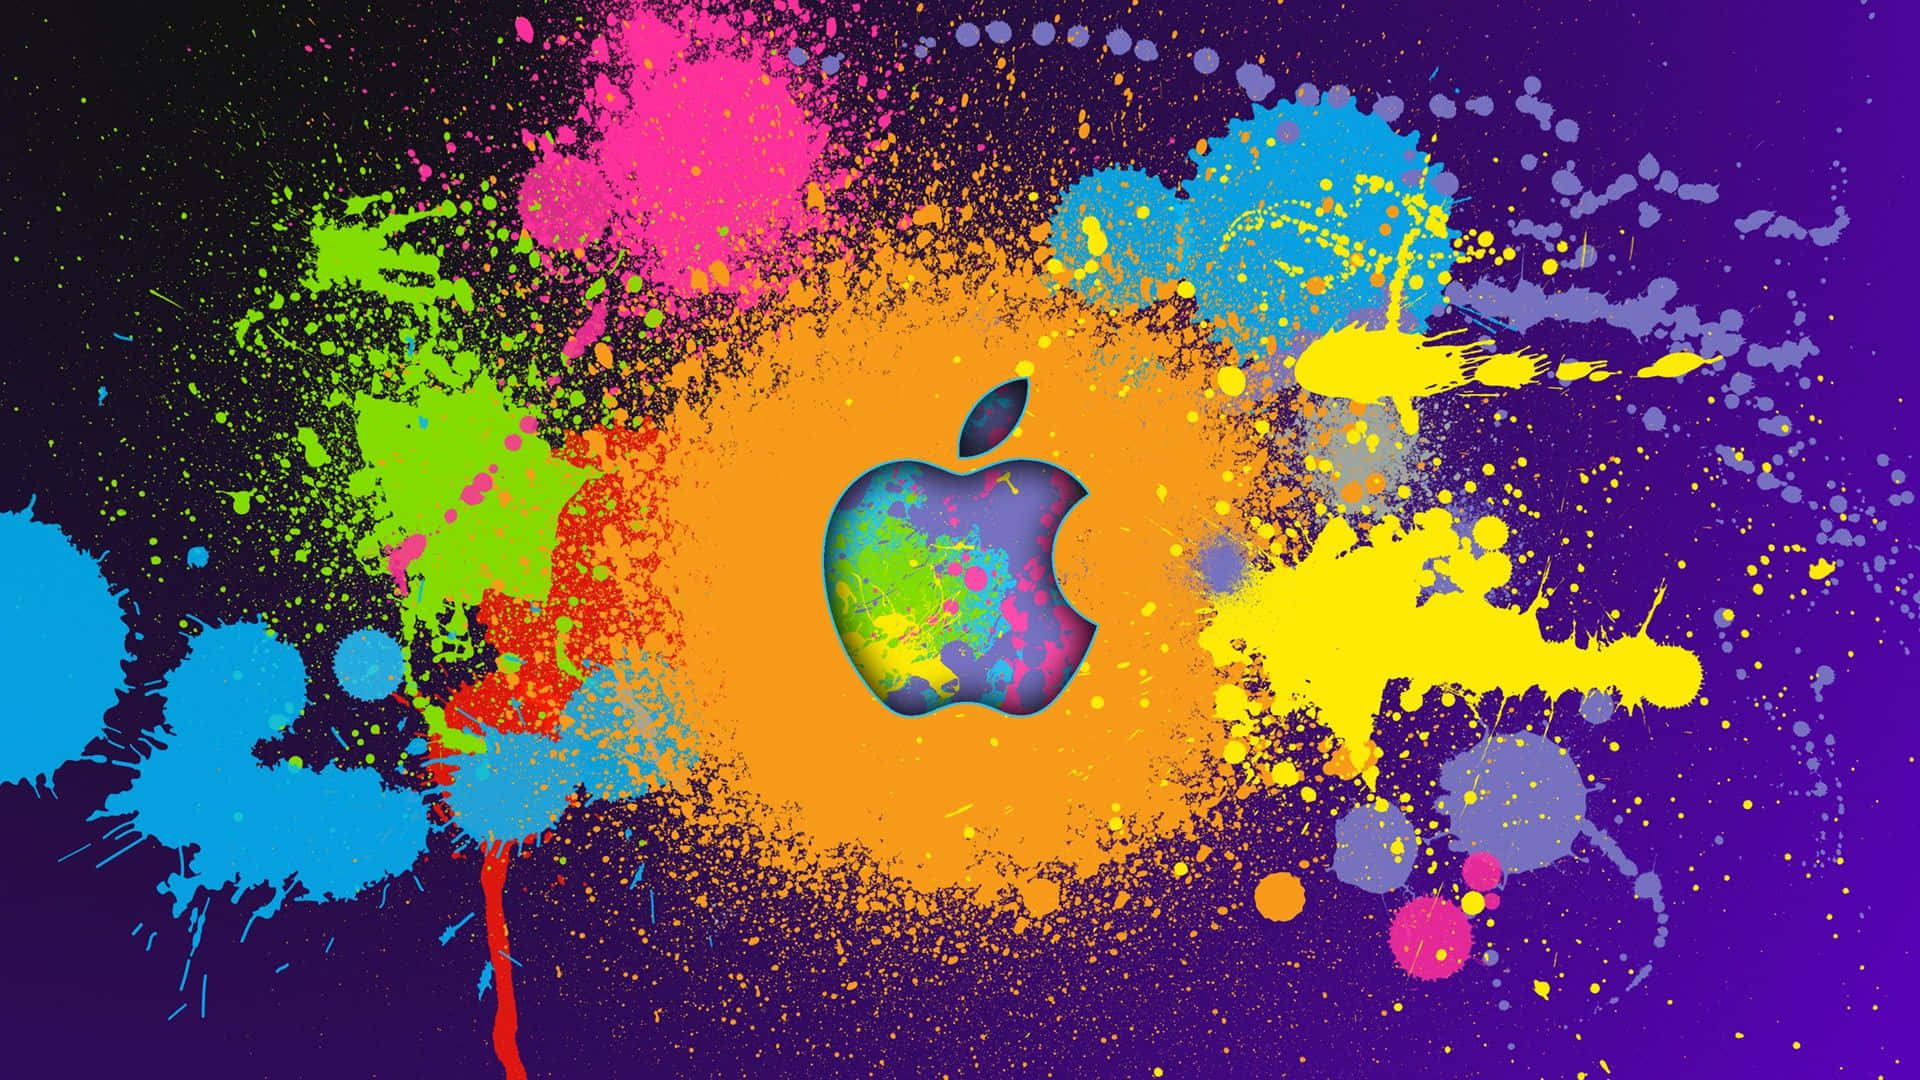 Stenciled Cool Mac Logo Paint Splatter Background